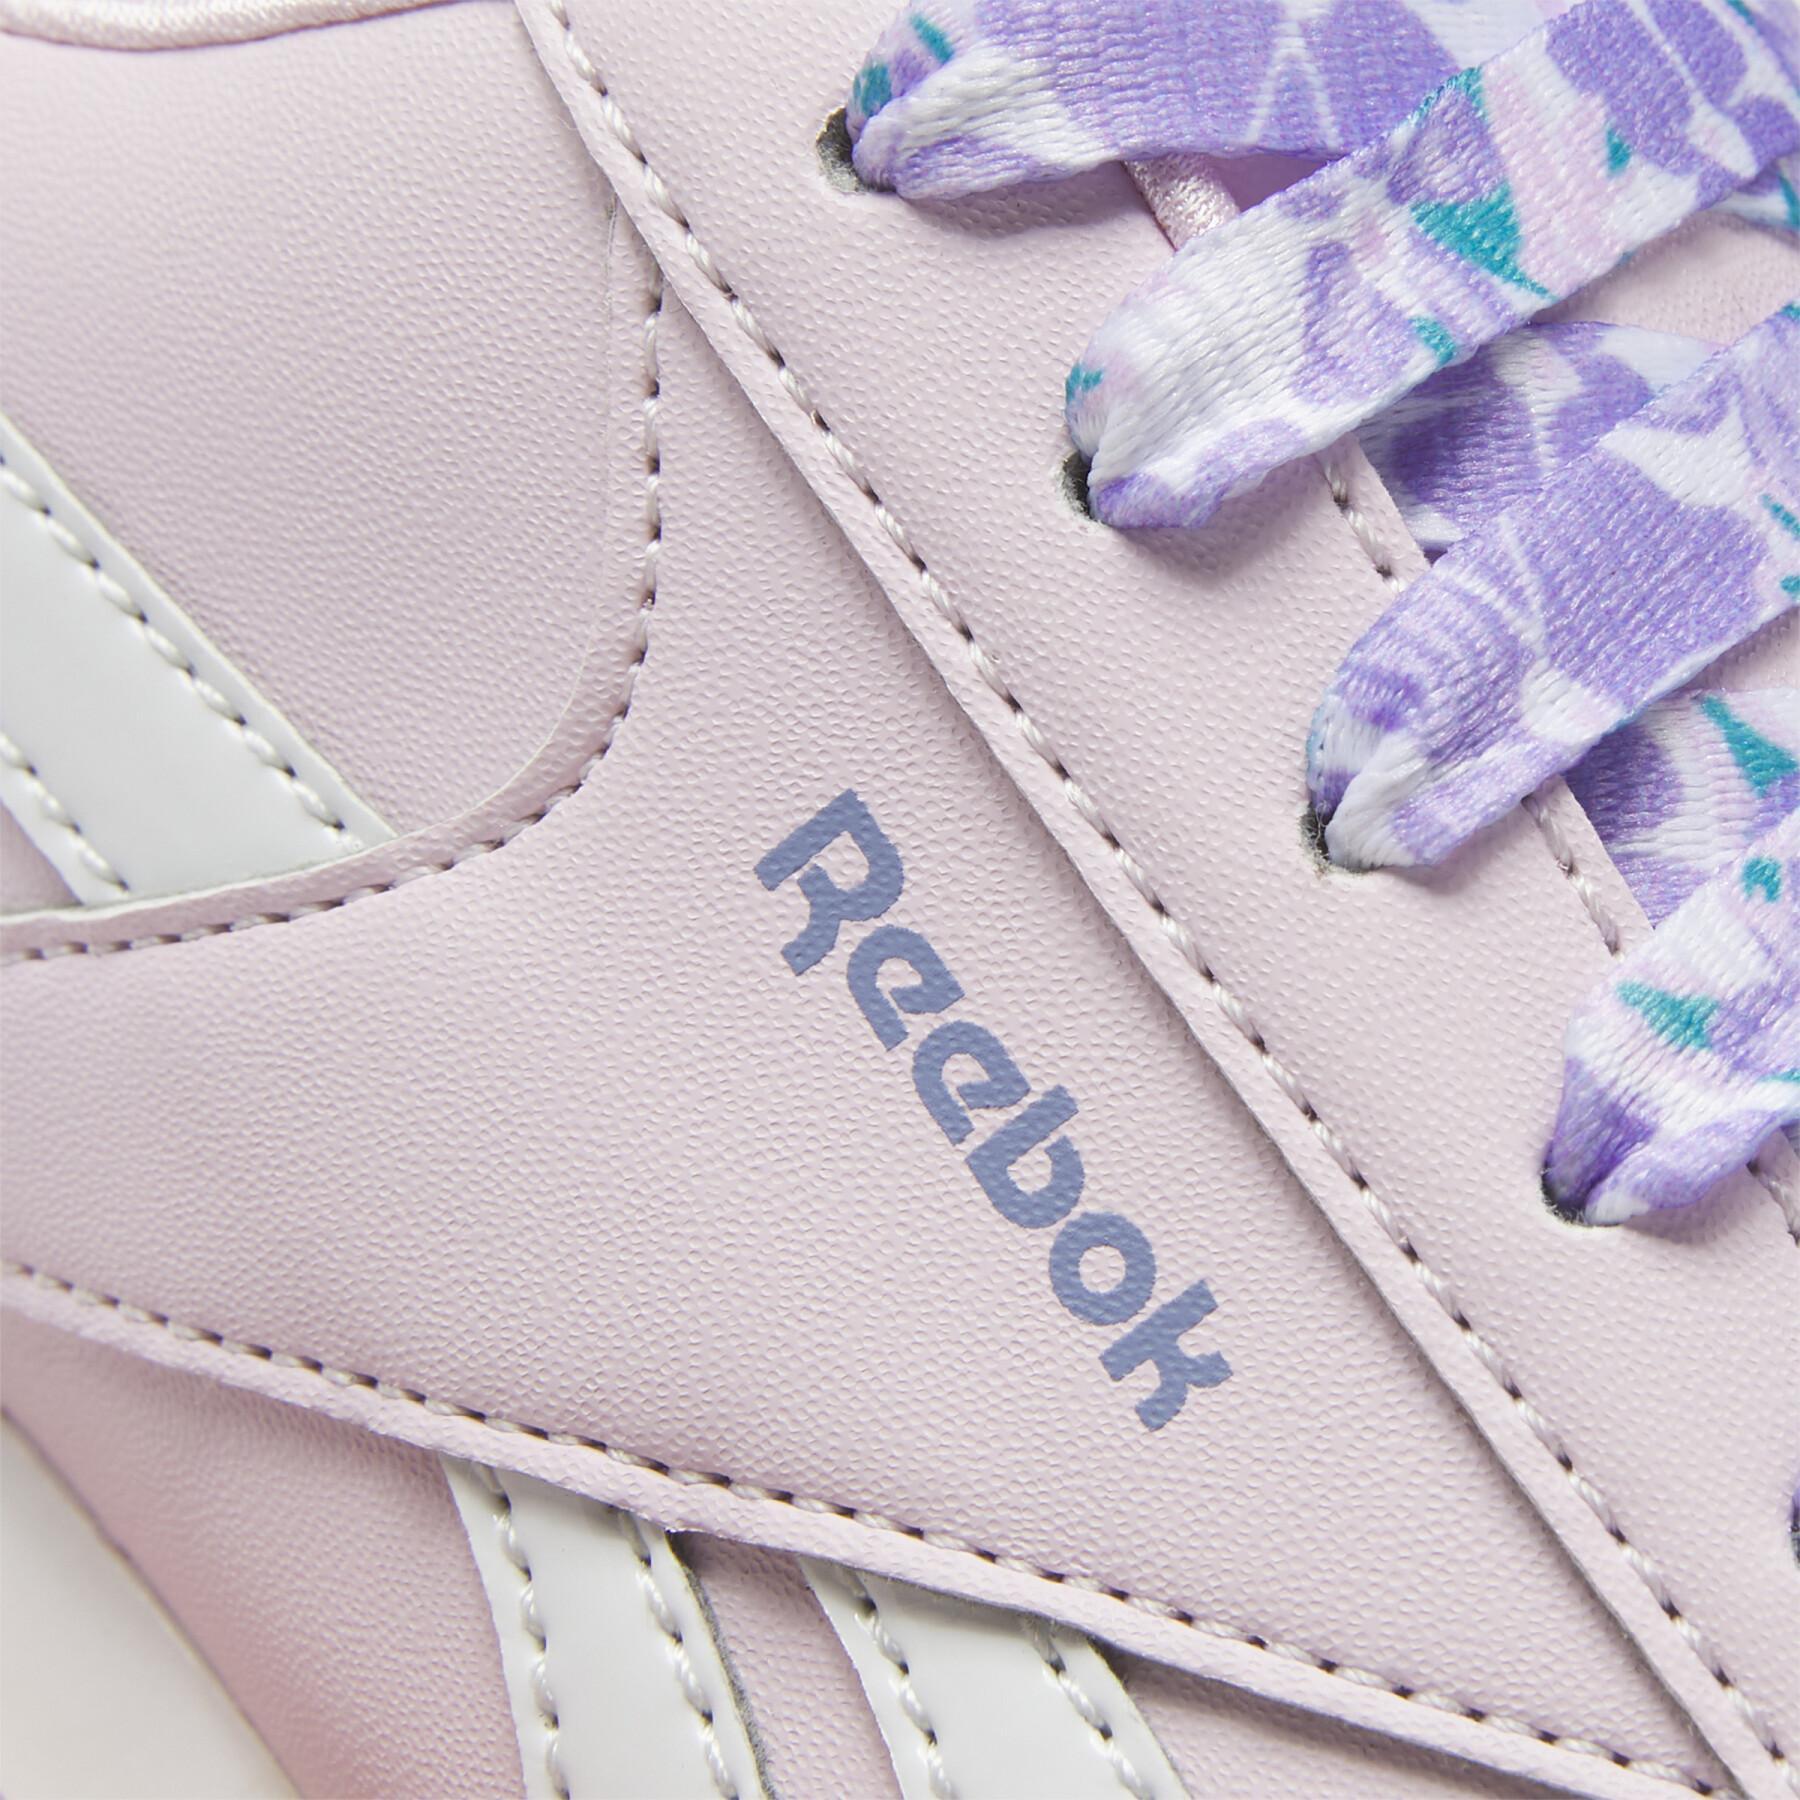 Sneakers für Mädchen Reebok Royal Classic Jog 3